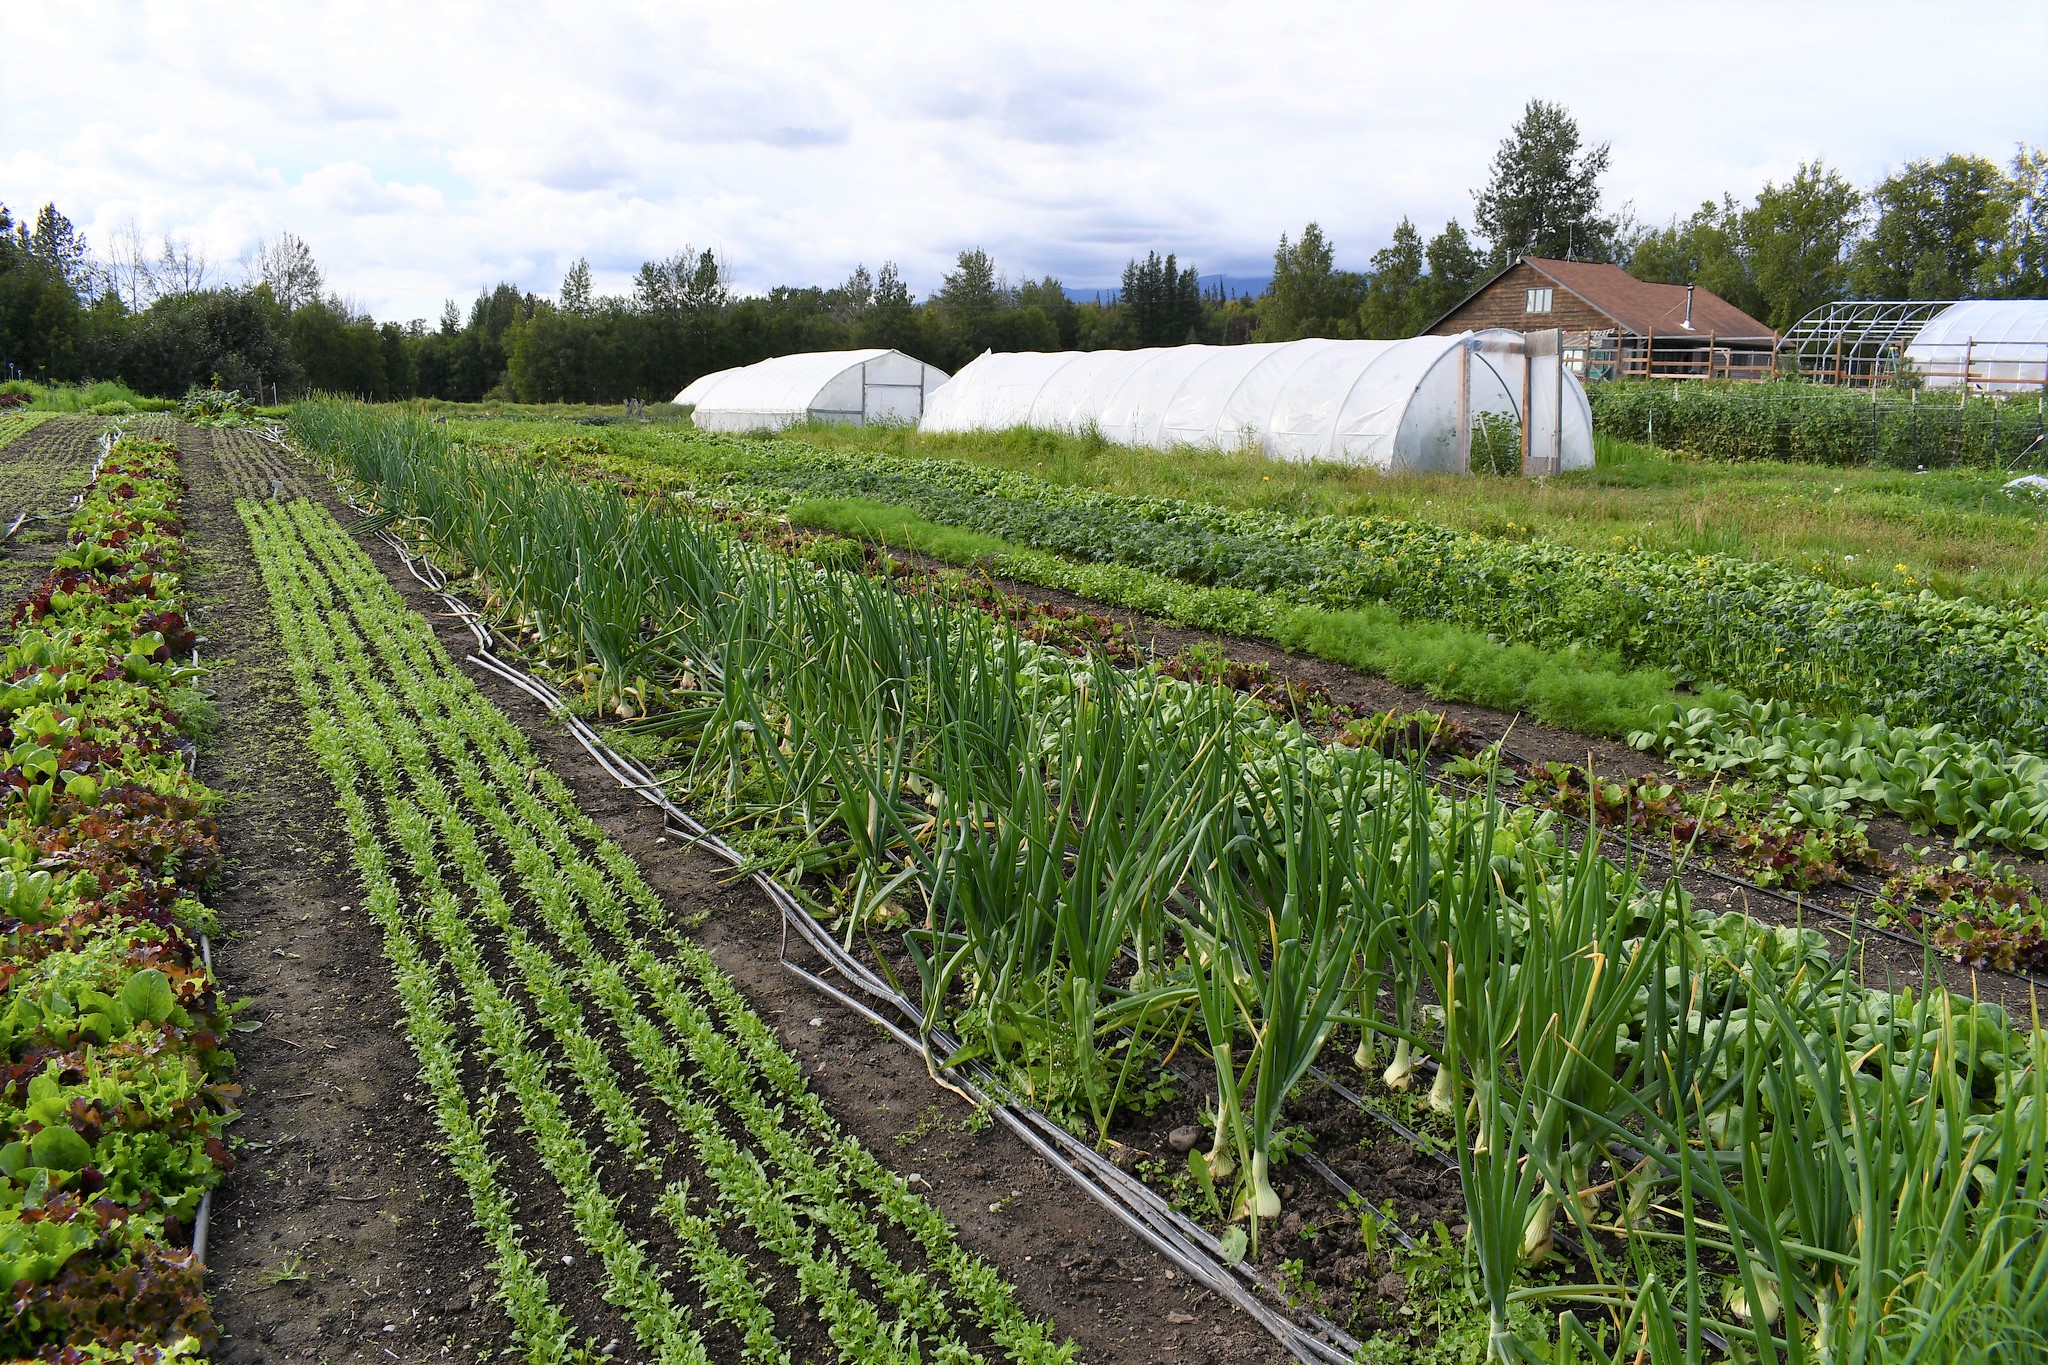 Rows of green vegetables at a farm in Alaska